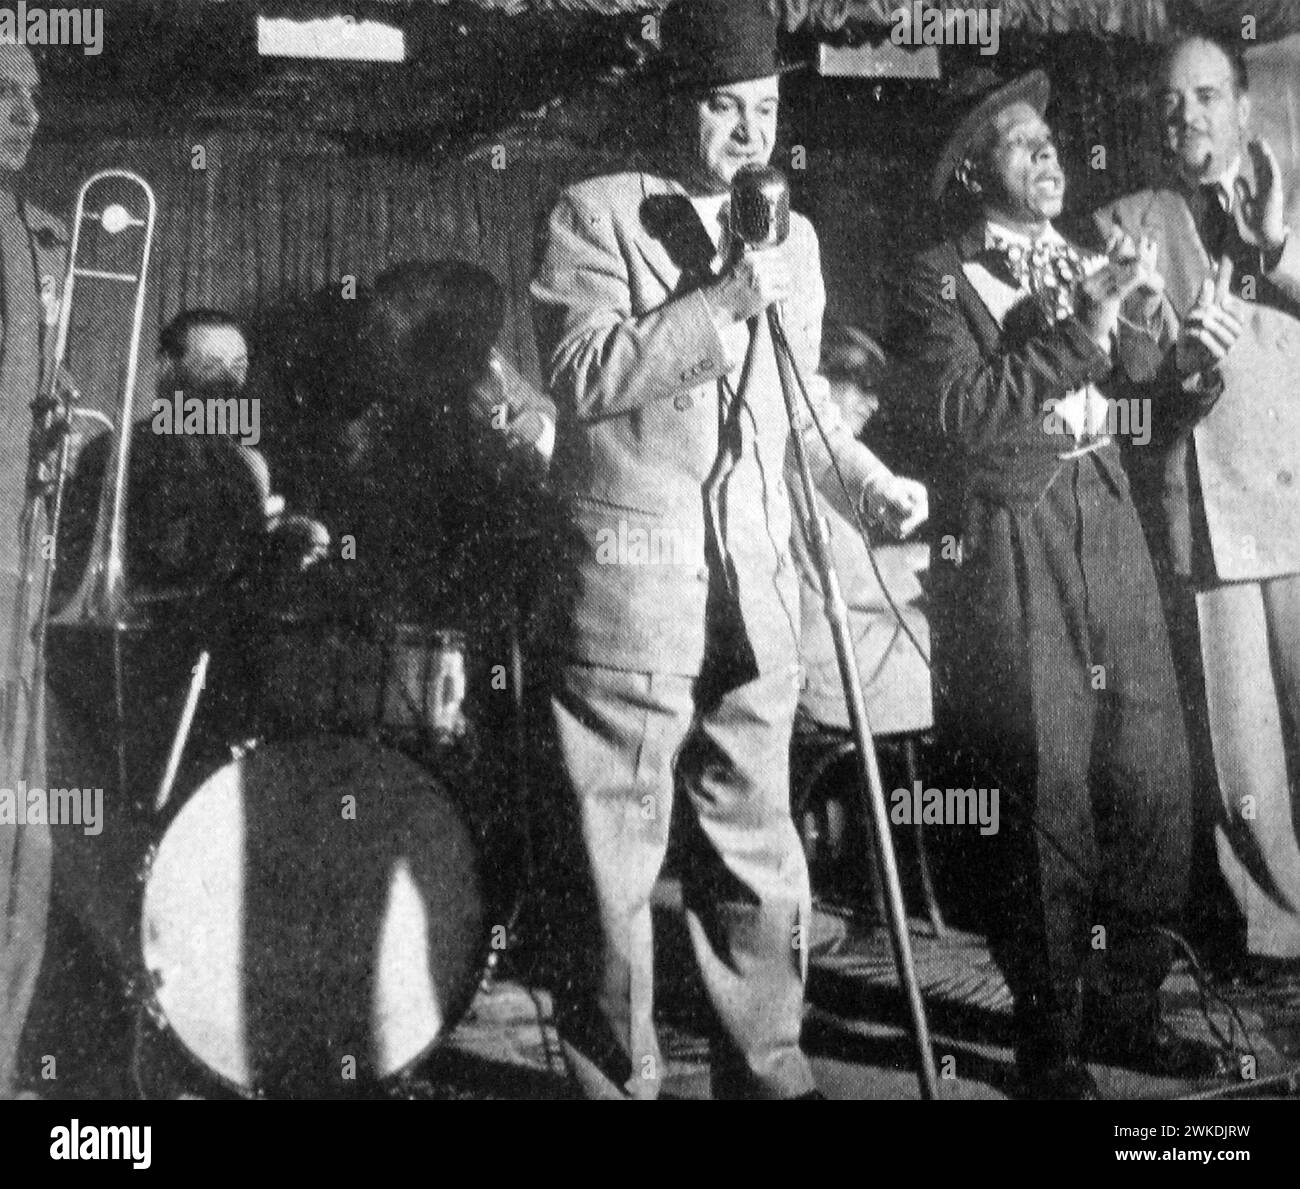 SHARKEY BONANO (1904-1972) musicista jazz americano a New Orleans nel 1950. Foto: Stanley Kubrick Foto Stock